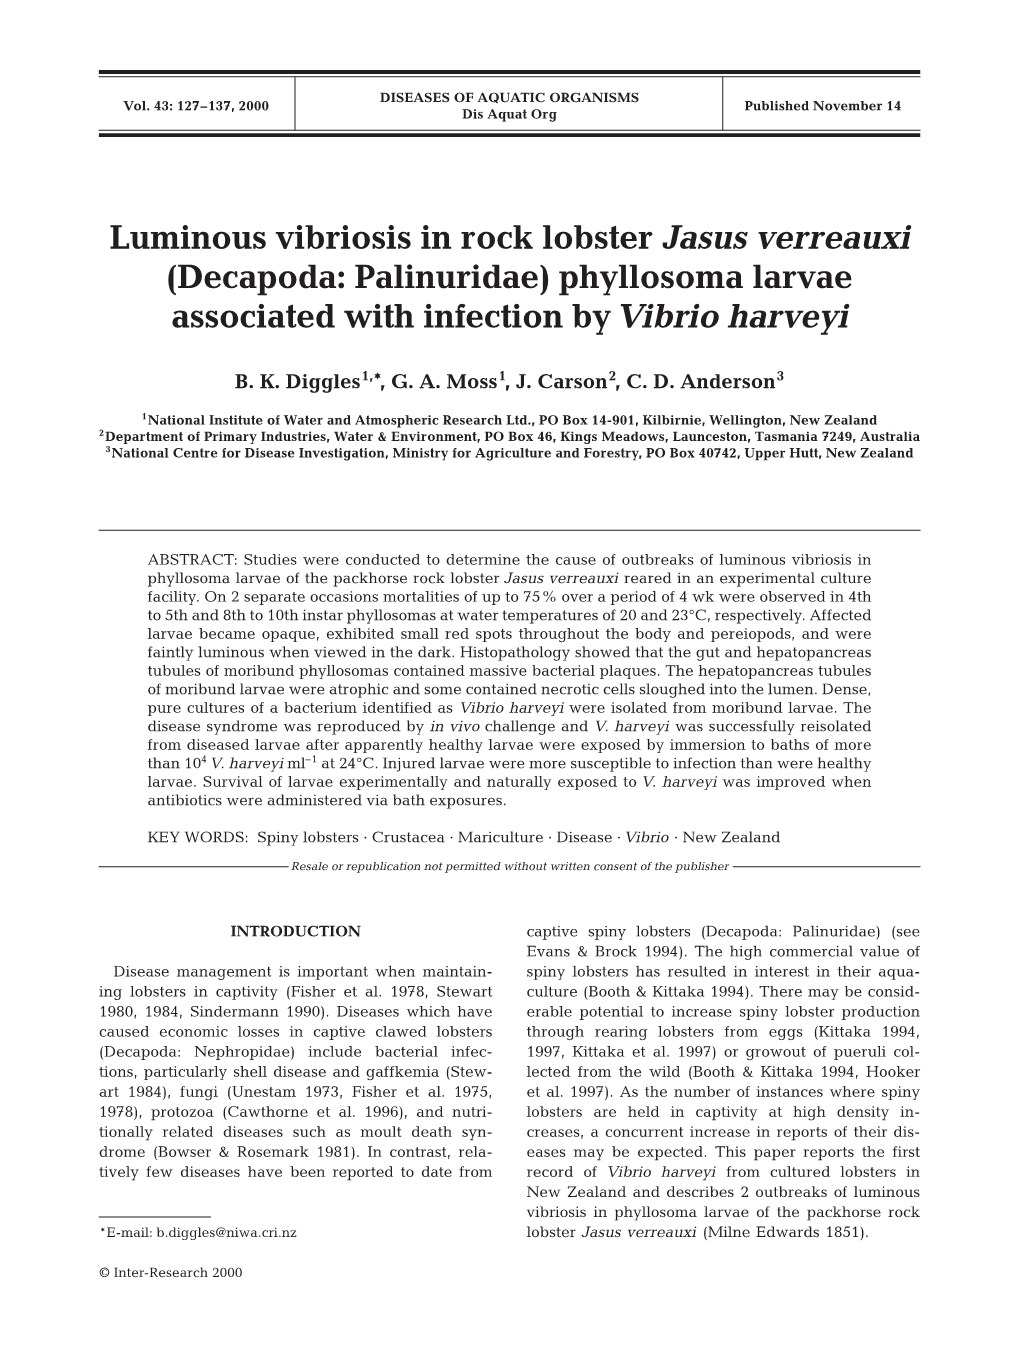 Luminous Vibriosis in Rock Lobster Jasus Verreauxi (Decapoda: Palinuridae) Phyllosoma Larvae Associated with Infection by Vibrio Harveyi